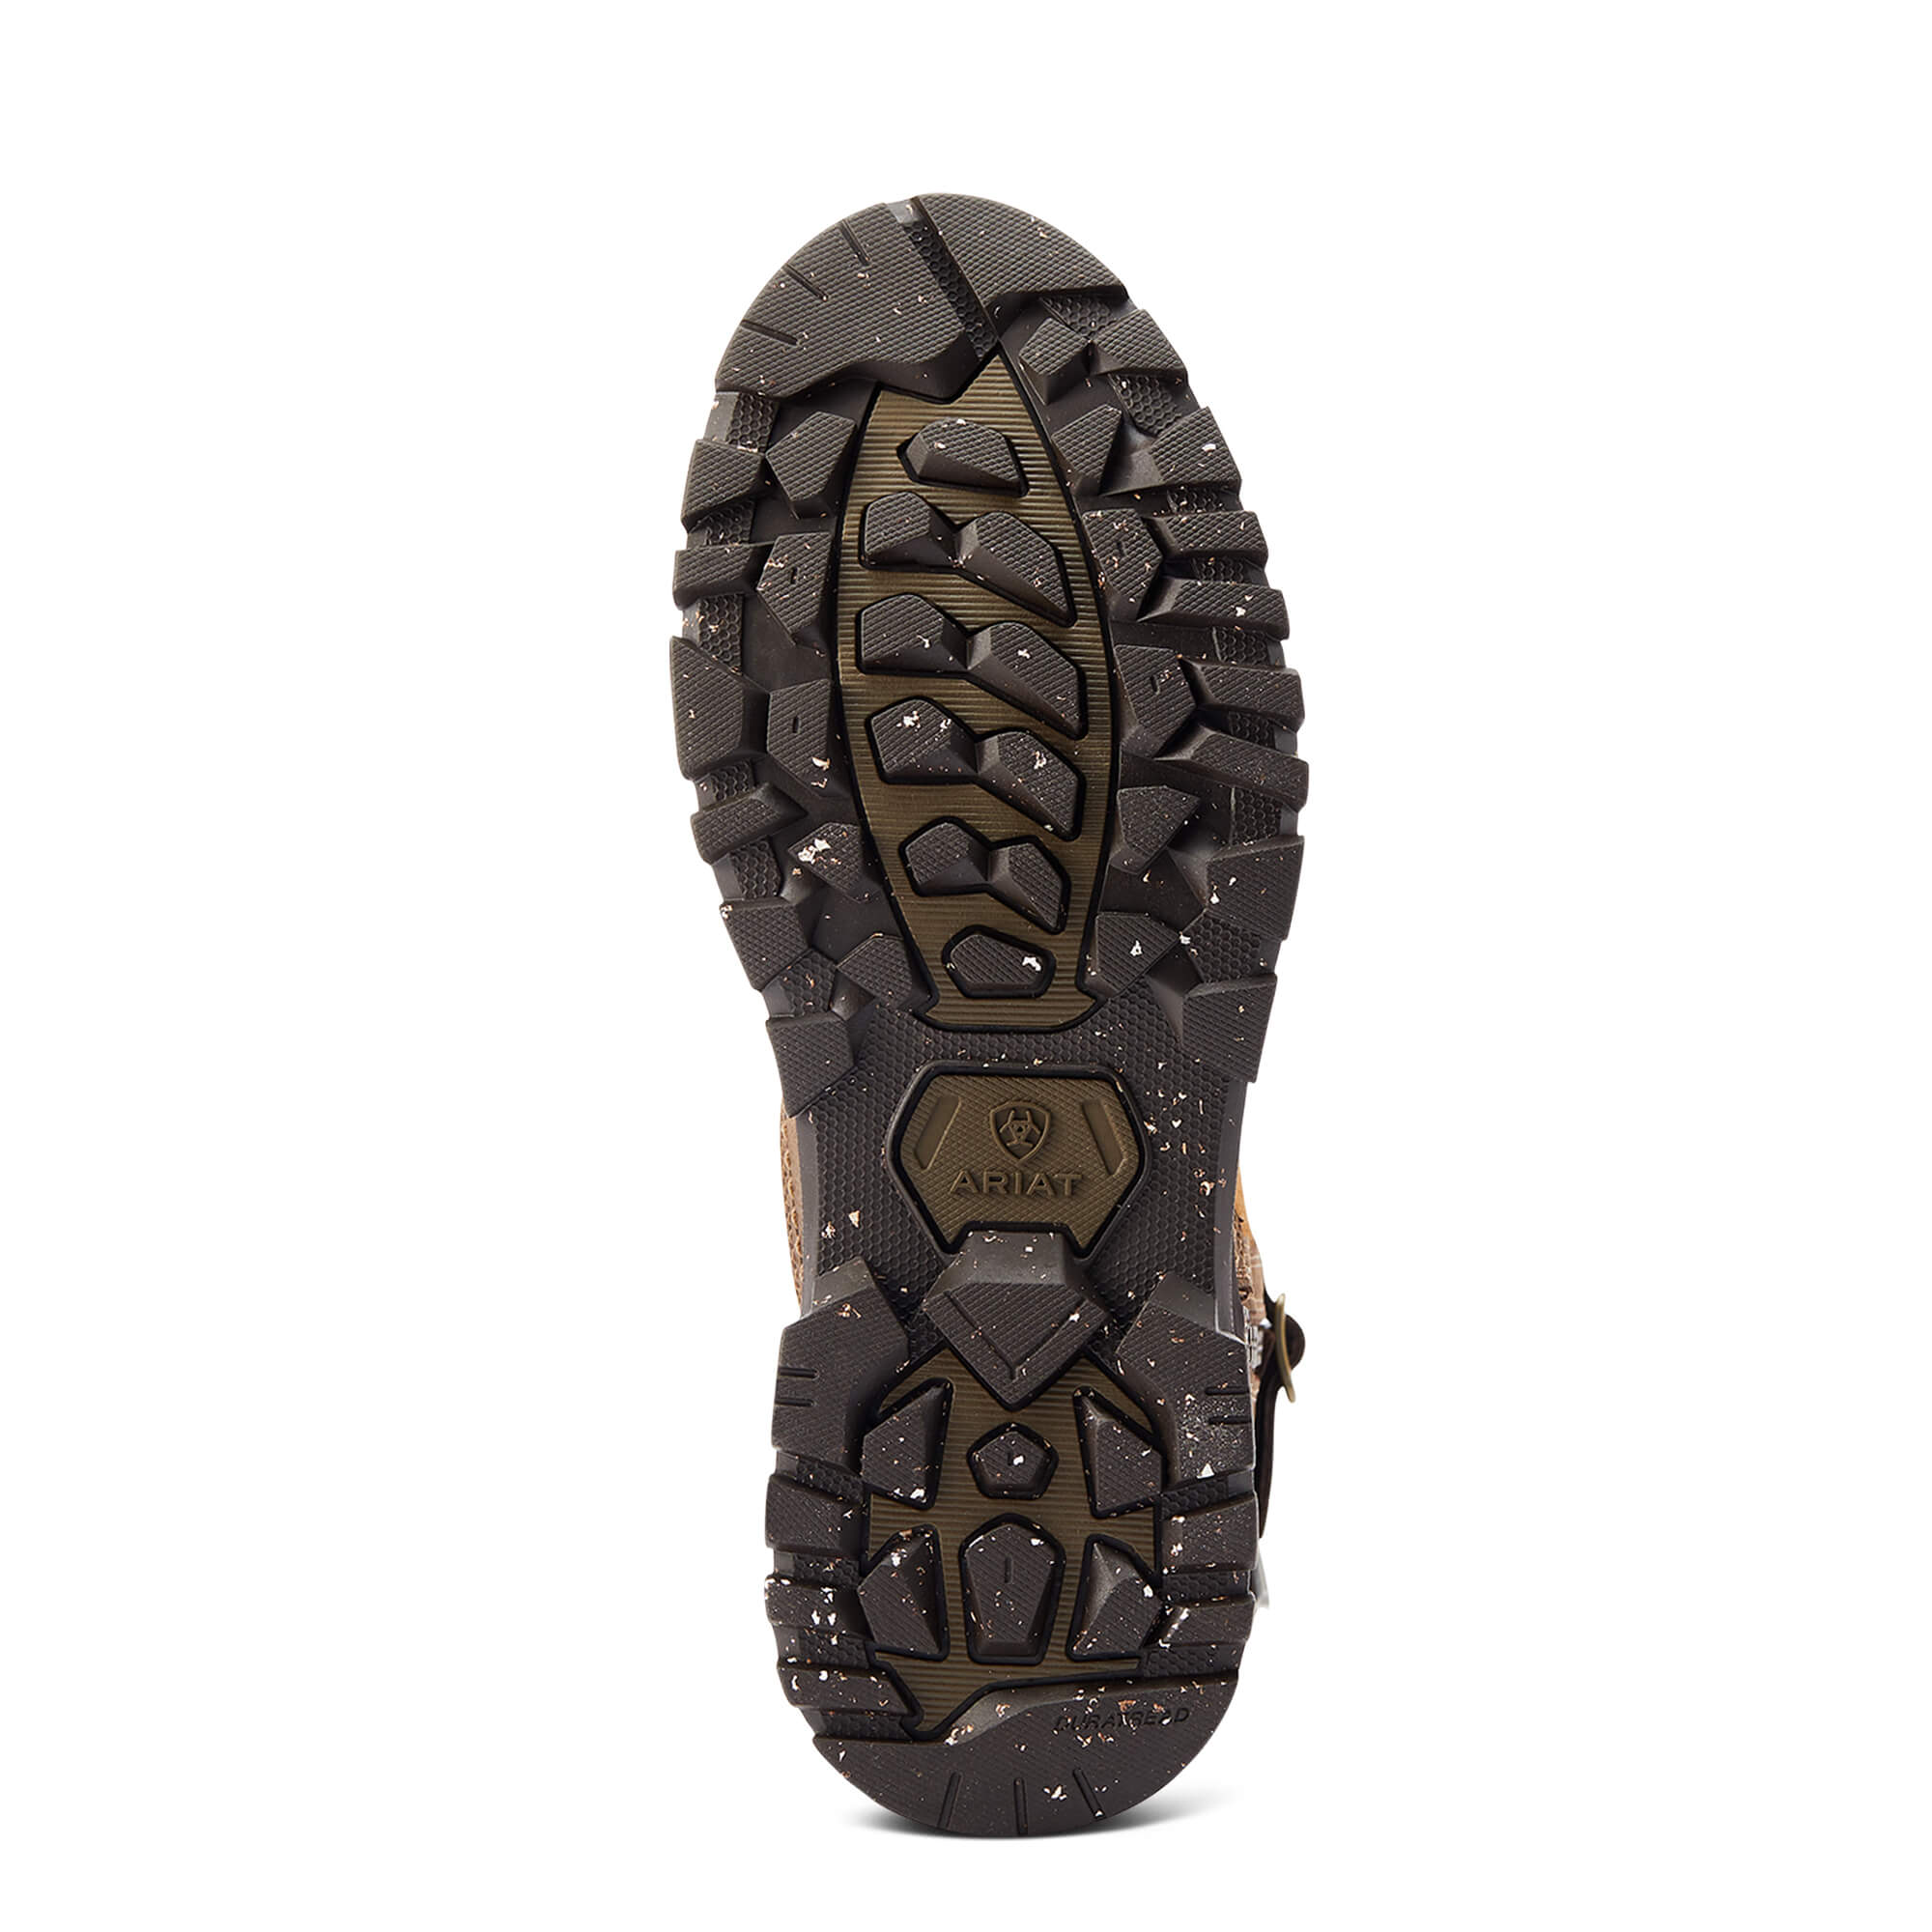 40% OFF - ARIAT Moresby Zip Waterproof Boots - Womens - Java - Size: UK 4.5